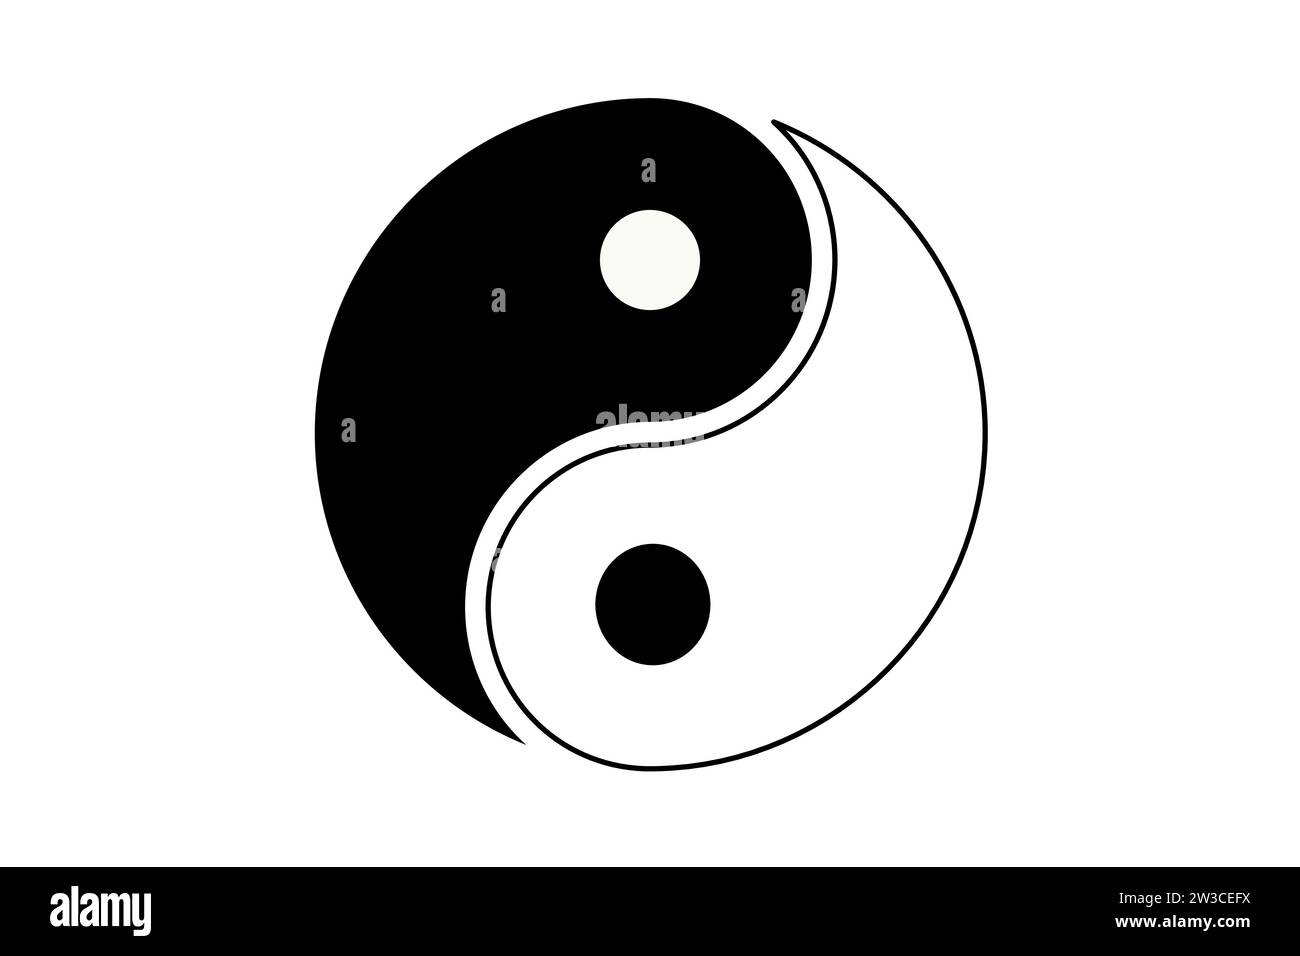 Yin yang illustration. Harmony, balance, Taoism, Chinese philosophy, opposites, unity dualism chi nature energy Vector icons Stock Vector